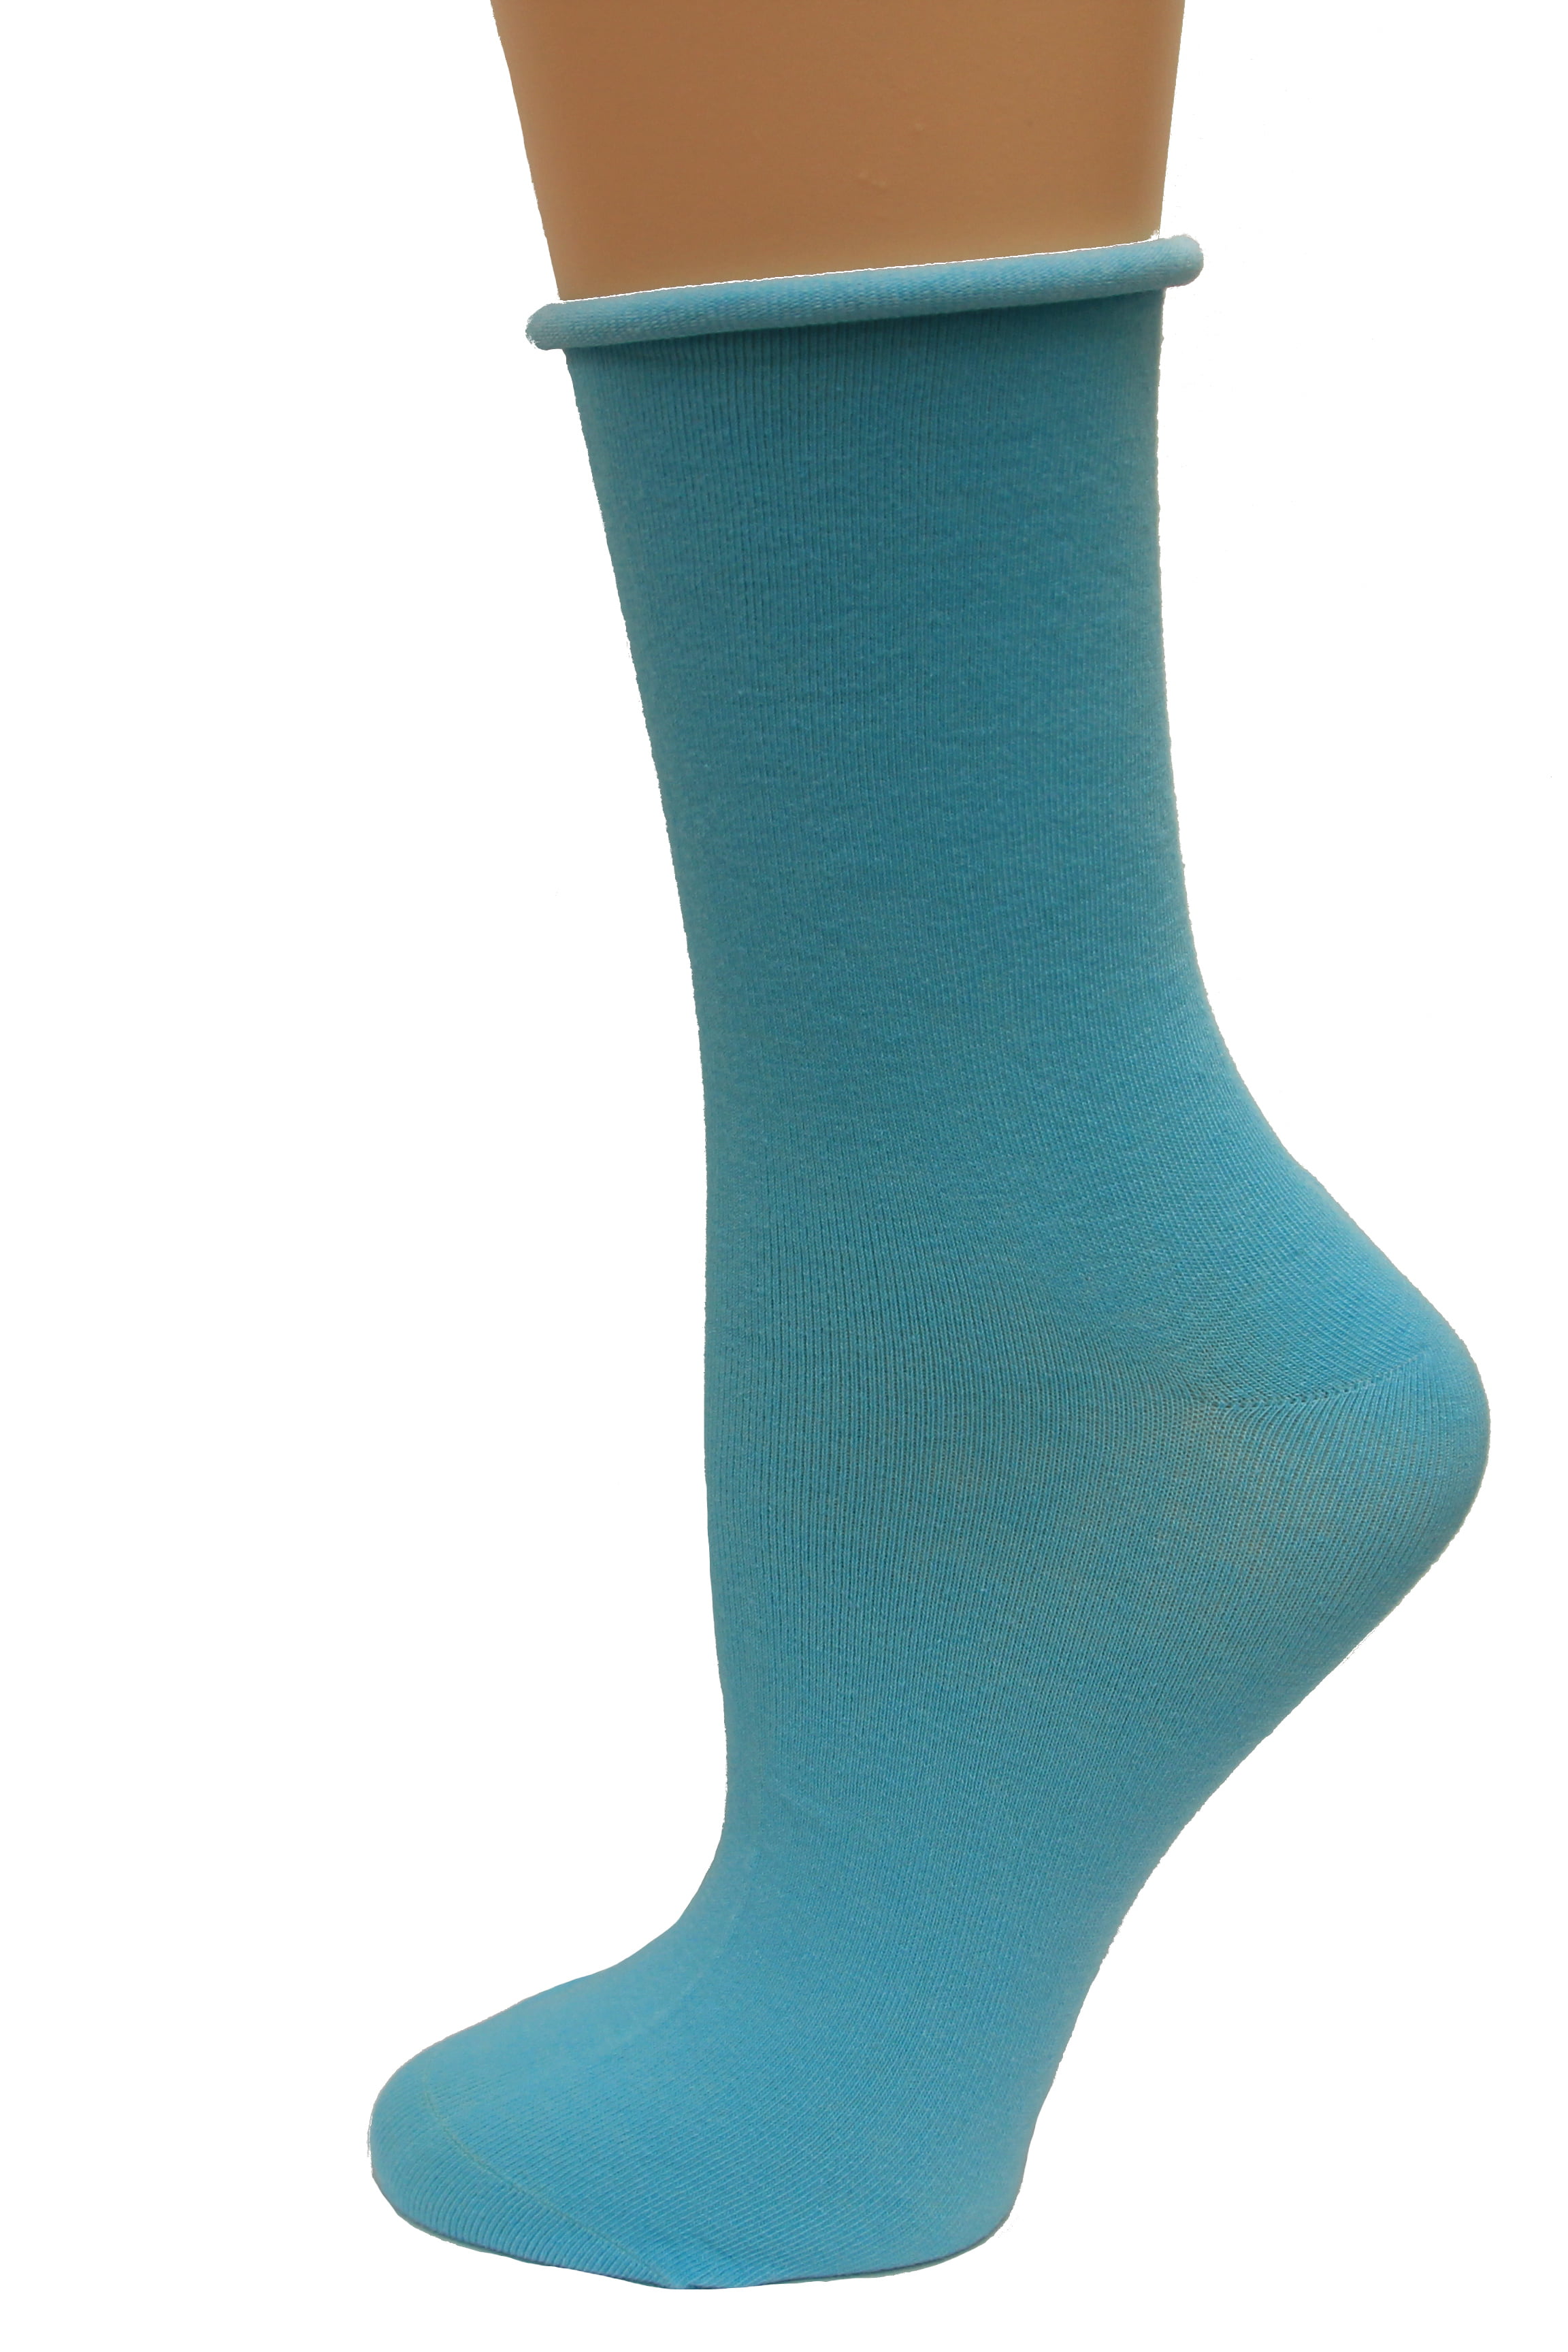 K.Bell Soft Baby Blue Cotton Blend Sport Ladies Socks Footie New